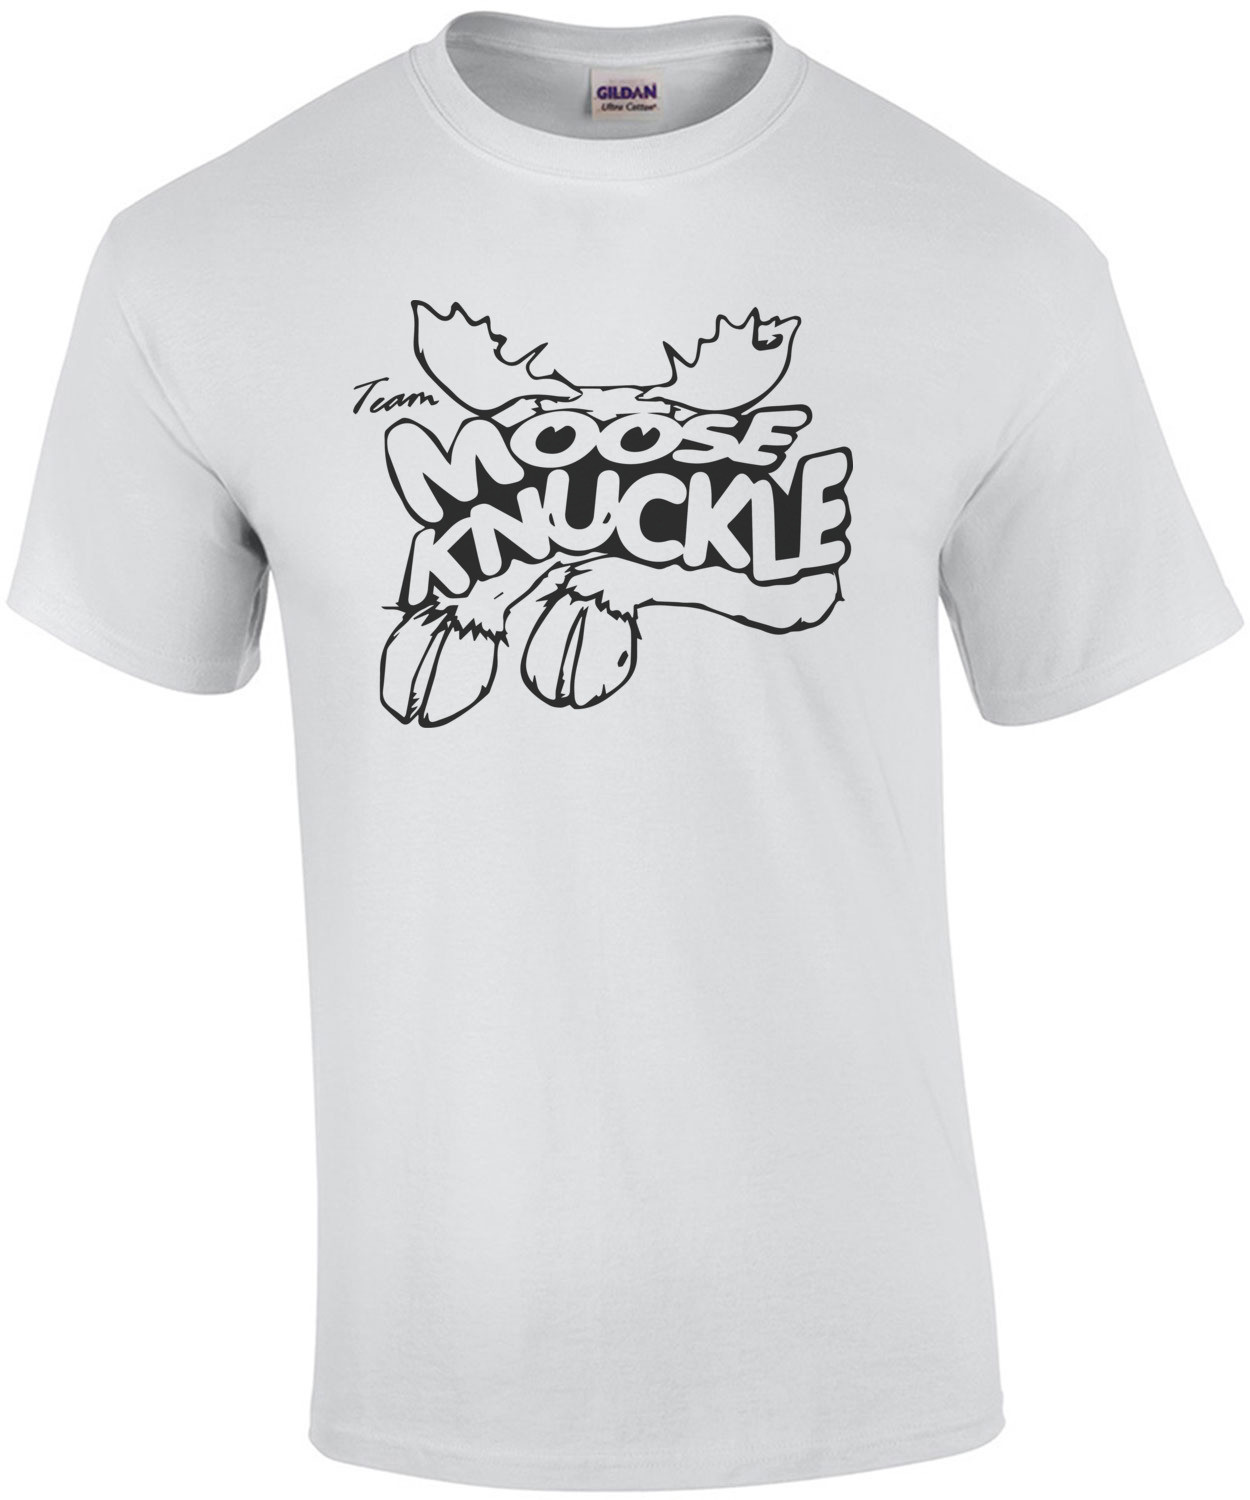 Team Moose Knuckle T-Shirt